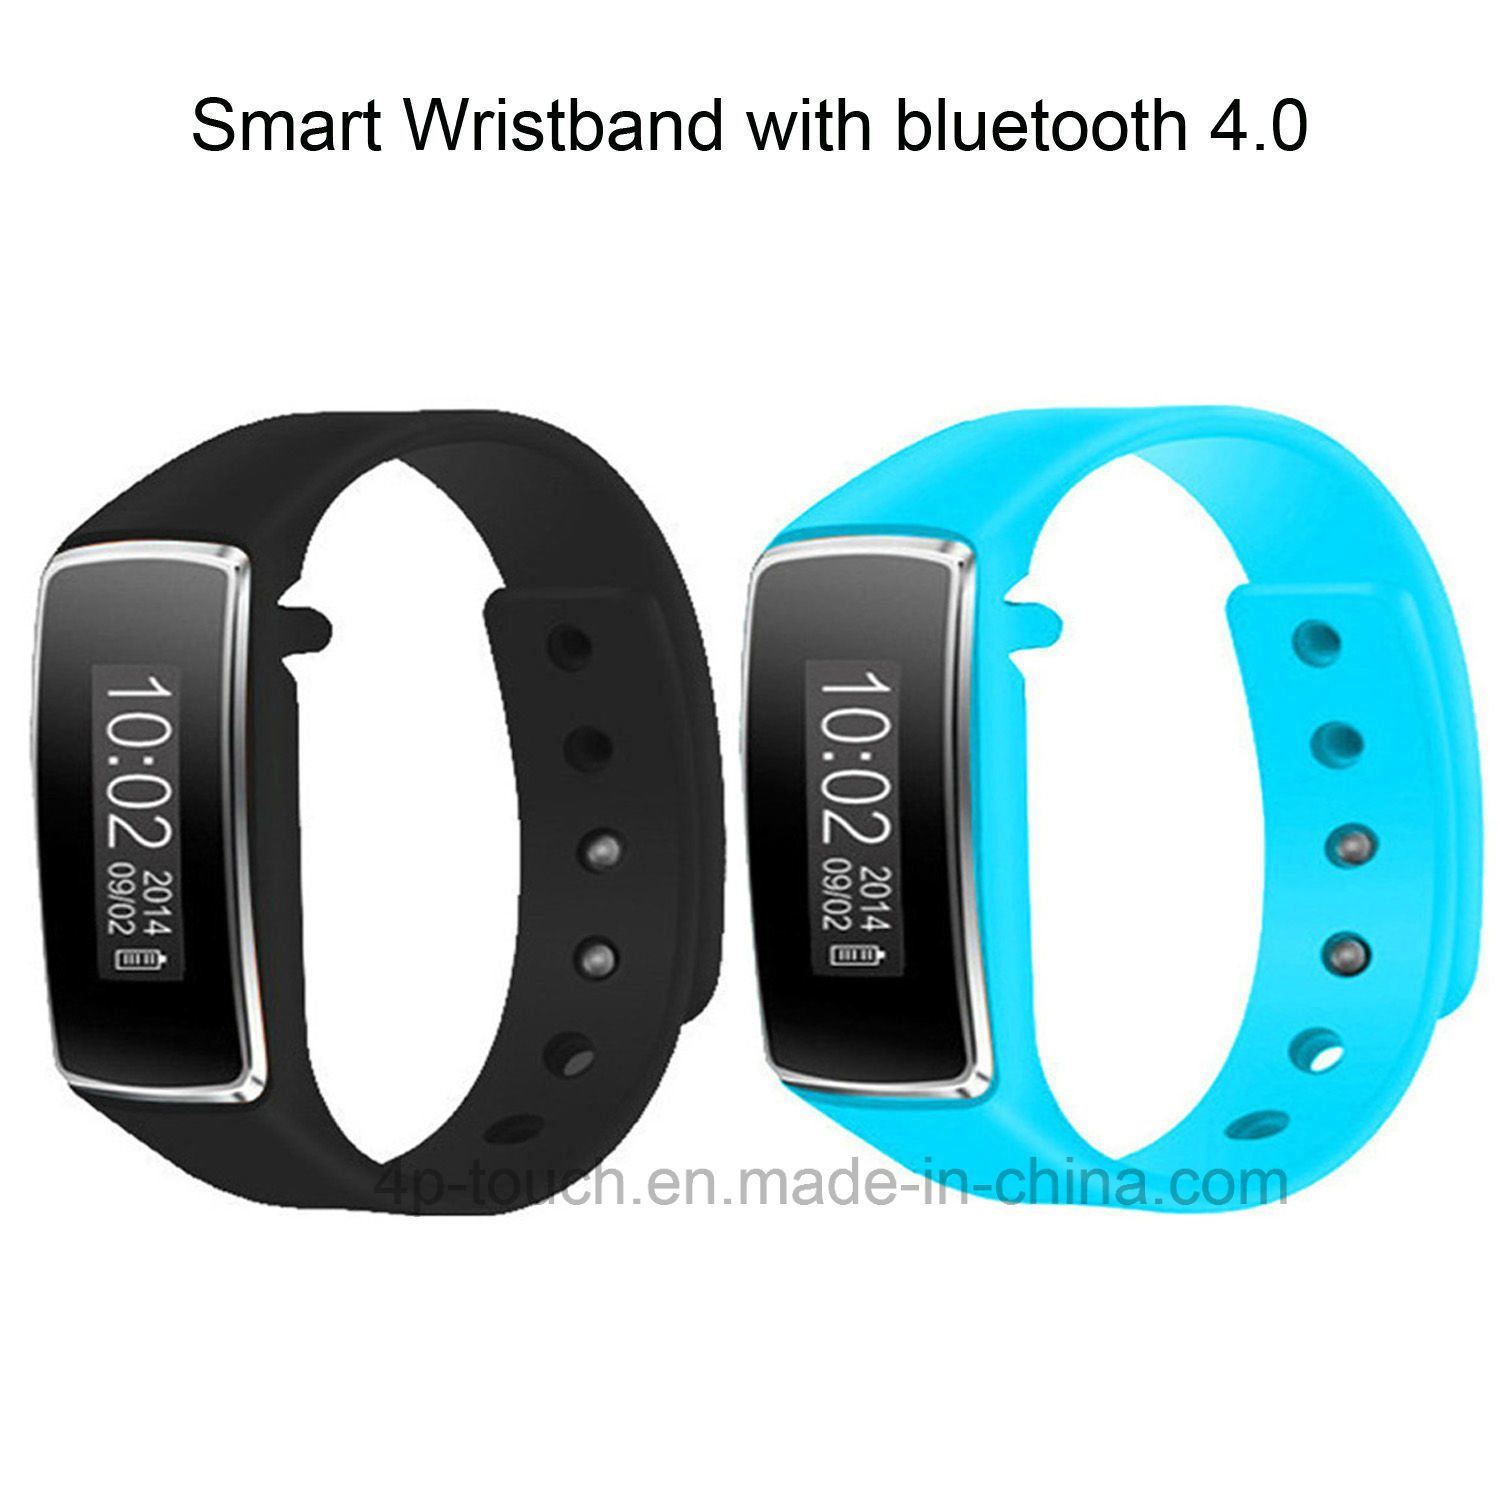 4.0 Bluetooth Smart Wristband for Health Tracking (V5)